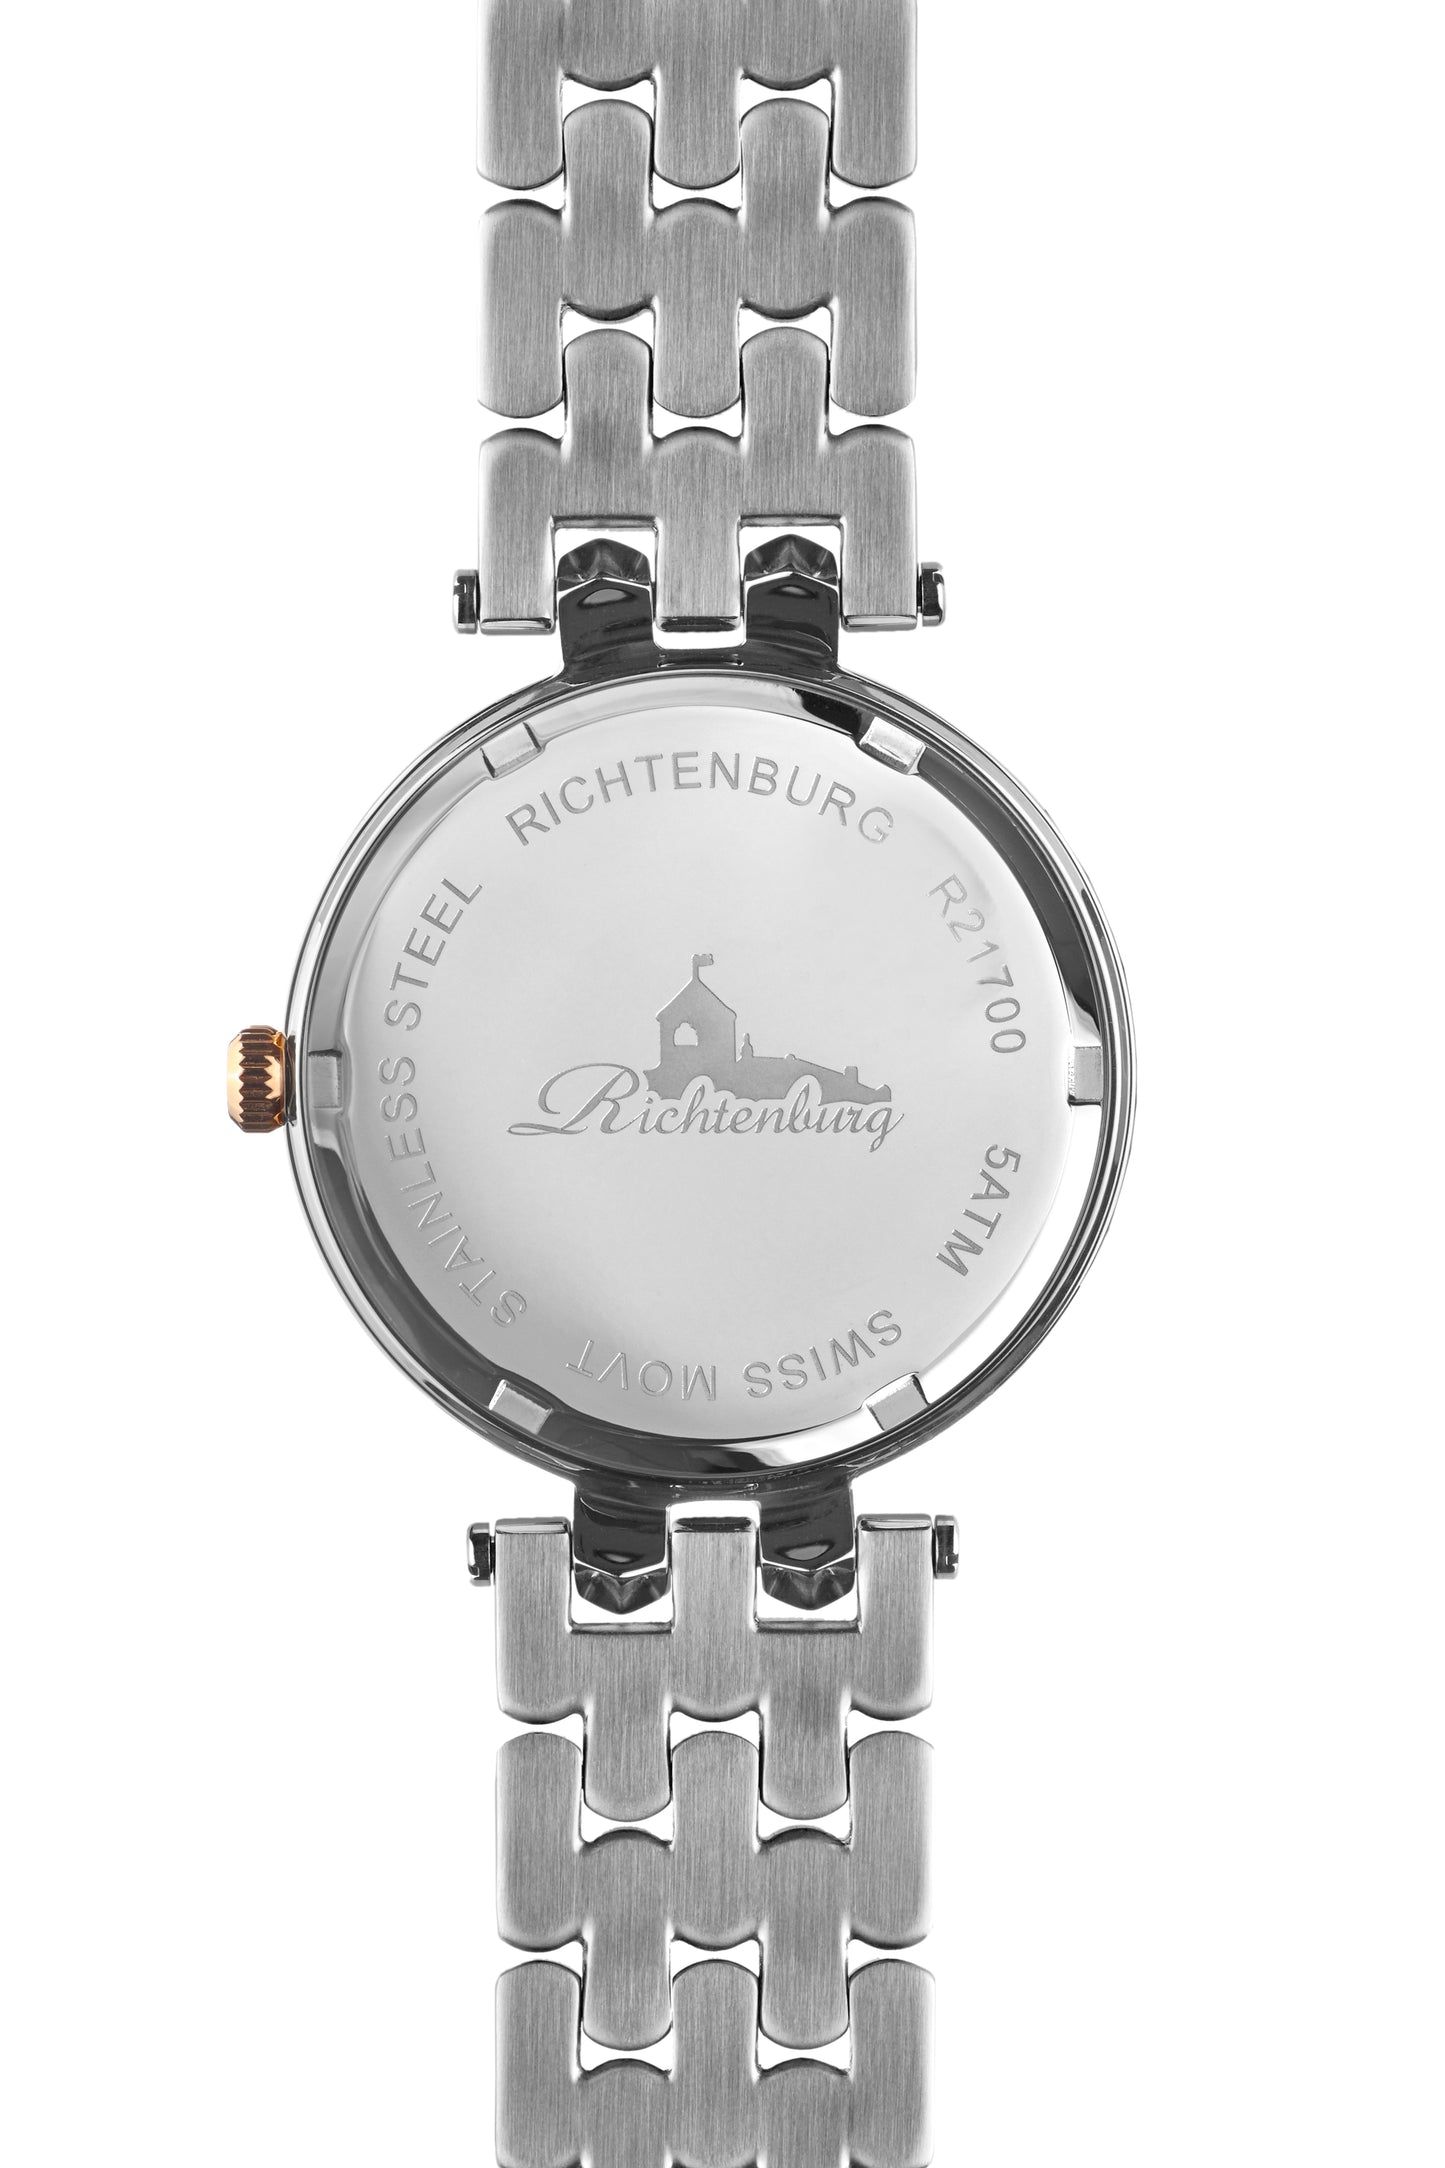 Automatic watches — Innessa — Richtenburg — two-tone rosegold steel